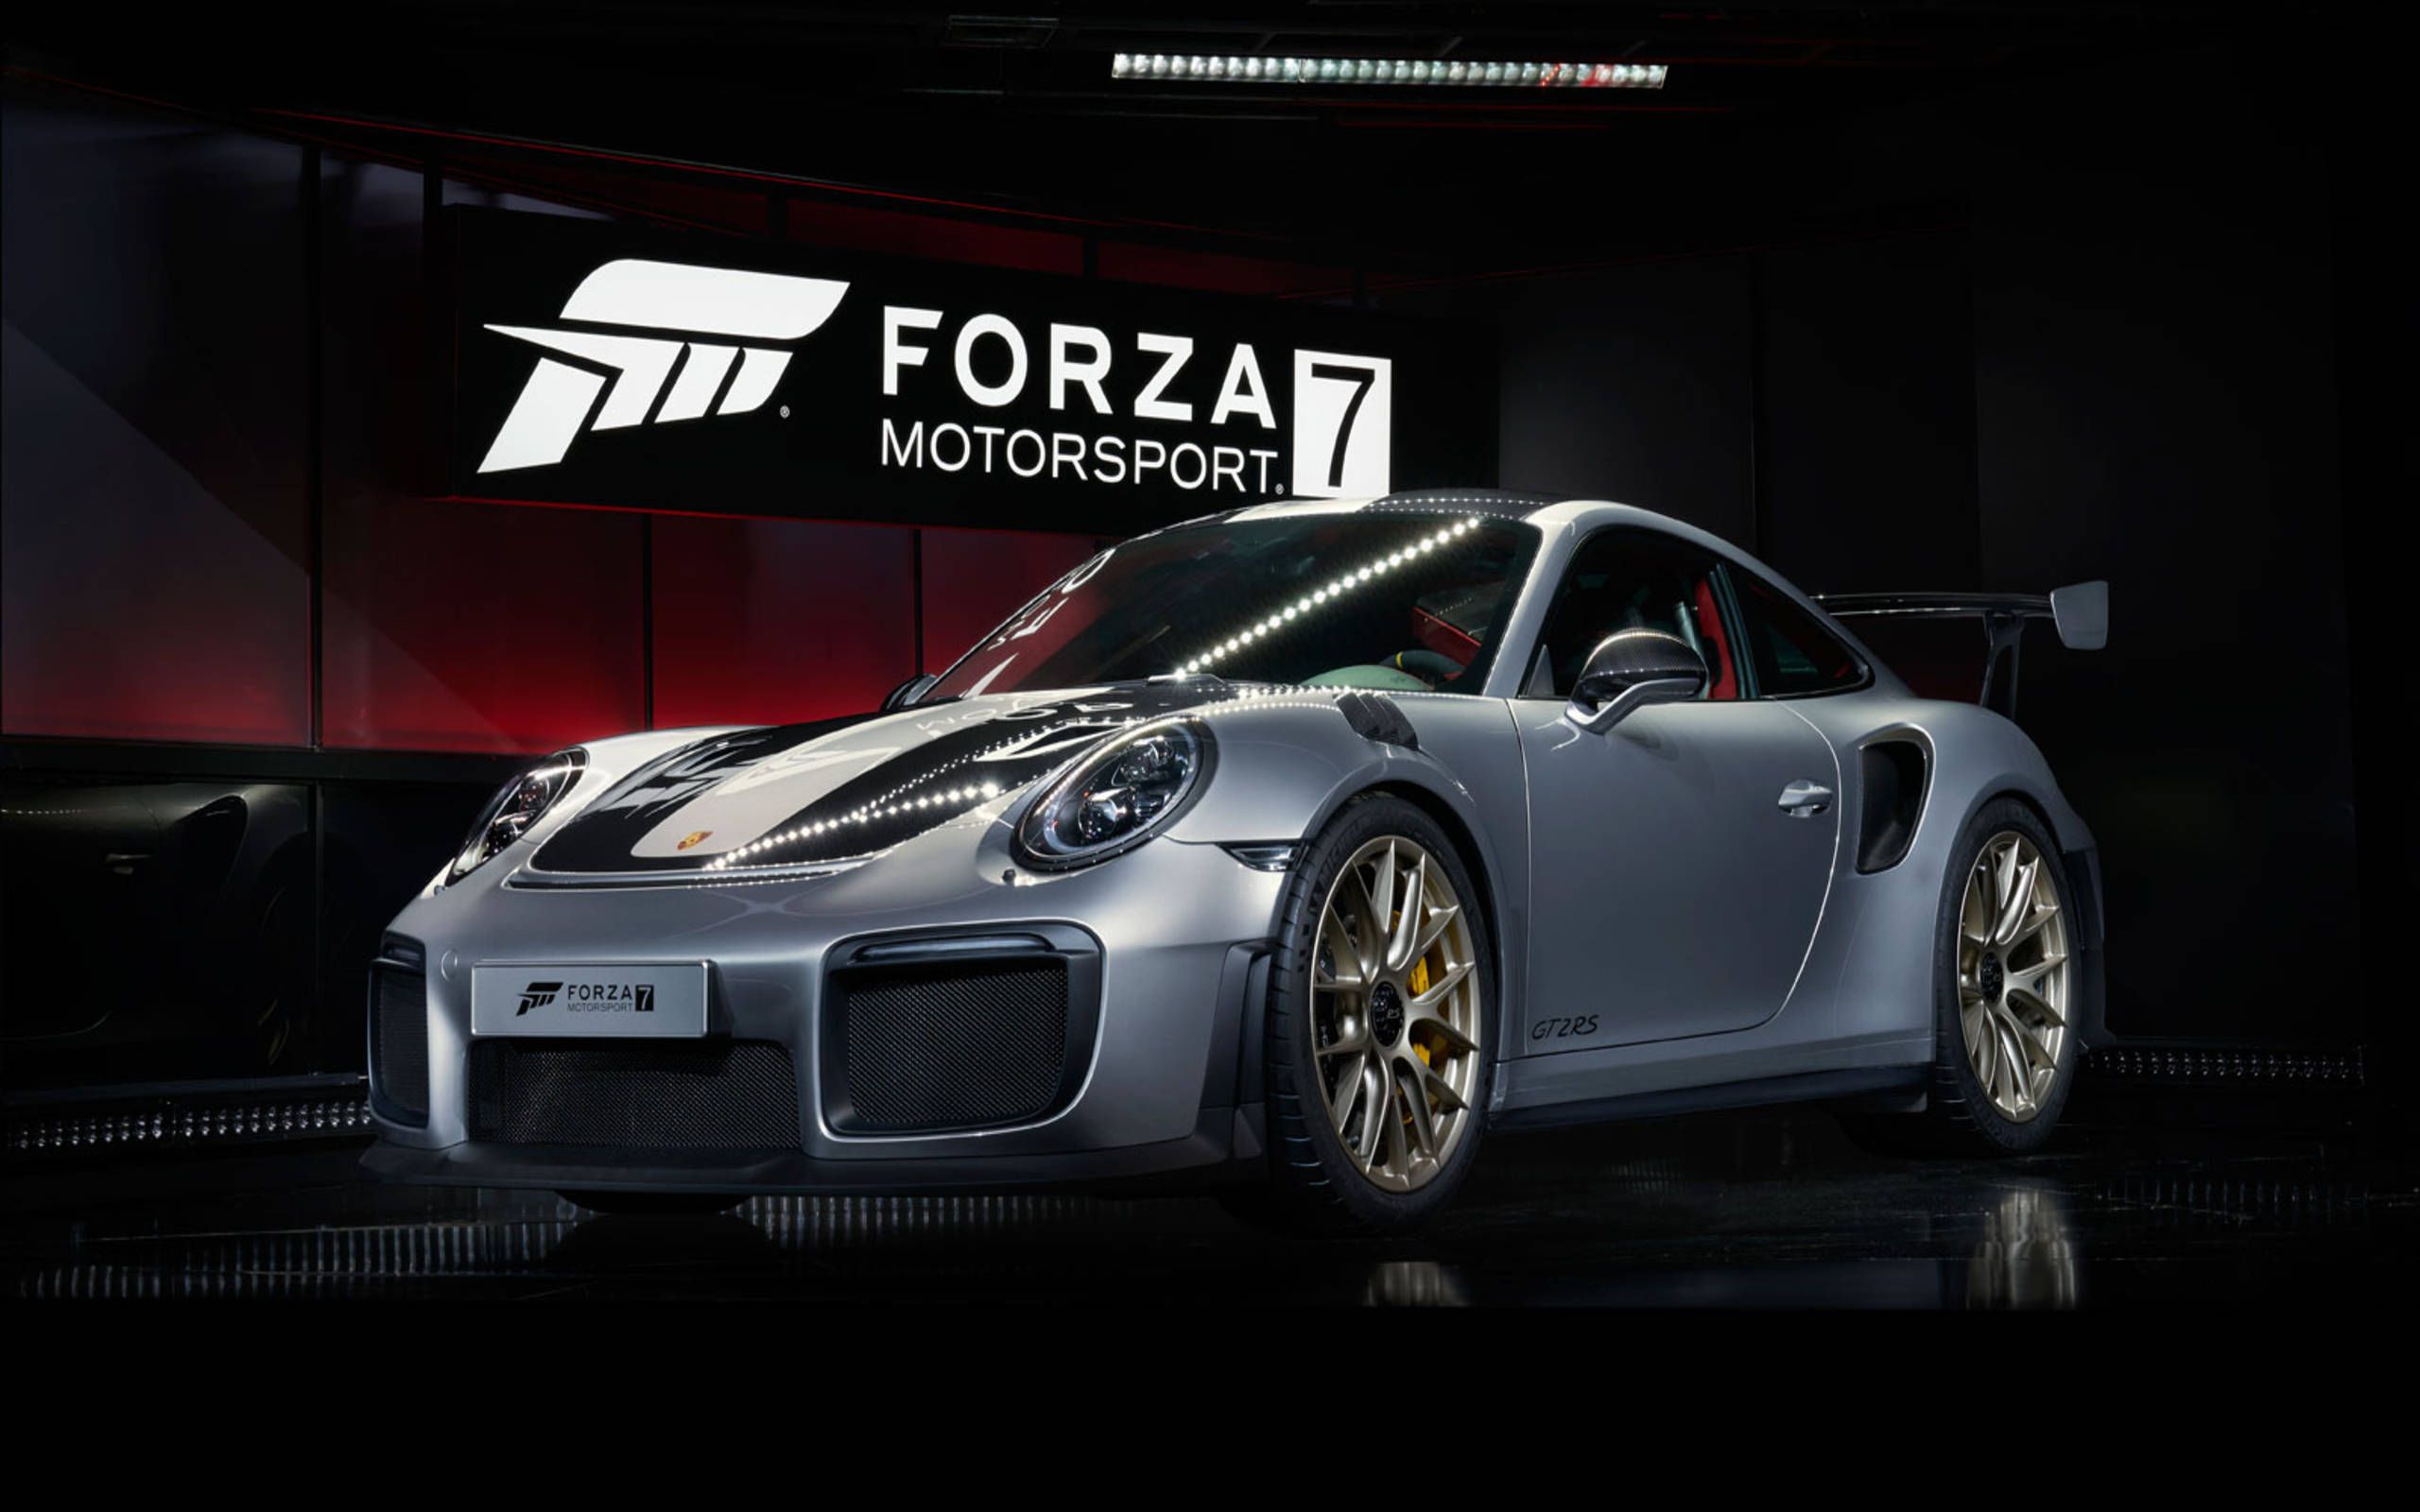 tilgivet Grudge Wings Surprise: 700-hp Porsche GT2 RS debuts with 'Forza Motorsport 7' at E3